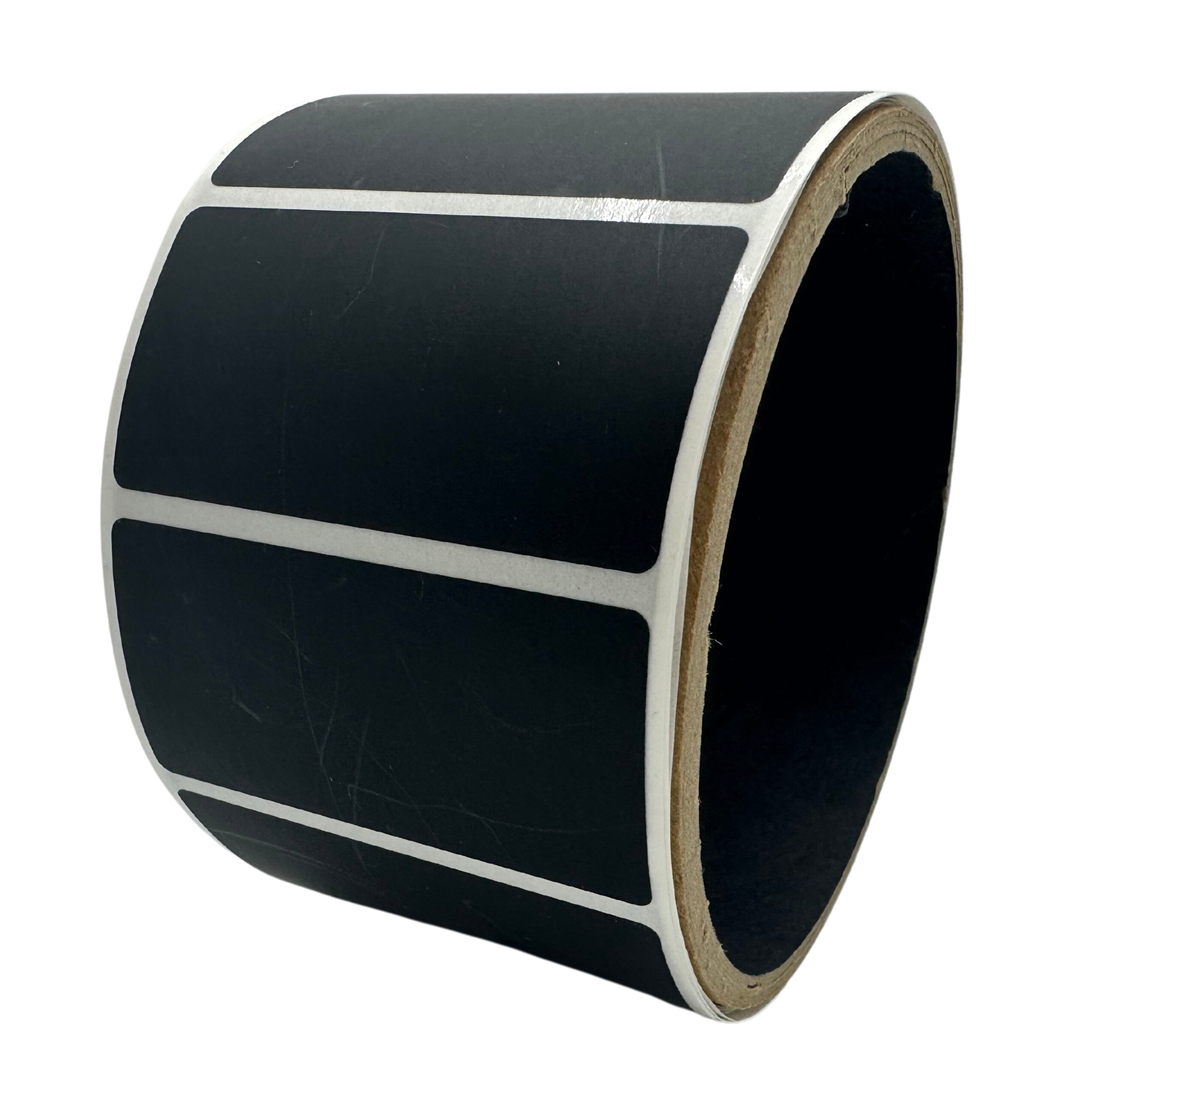 5,000 Black No Residue Tamper-Evident Security Labels TamperGuard® Seal Sticker, Rectangle 2" x 1" (51mm x 25mm).